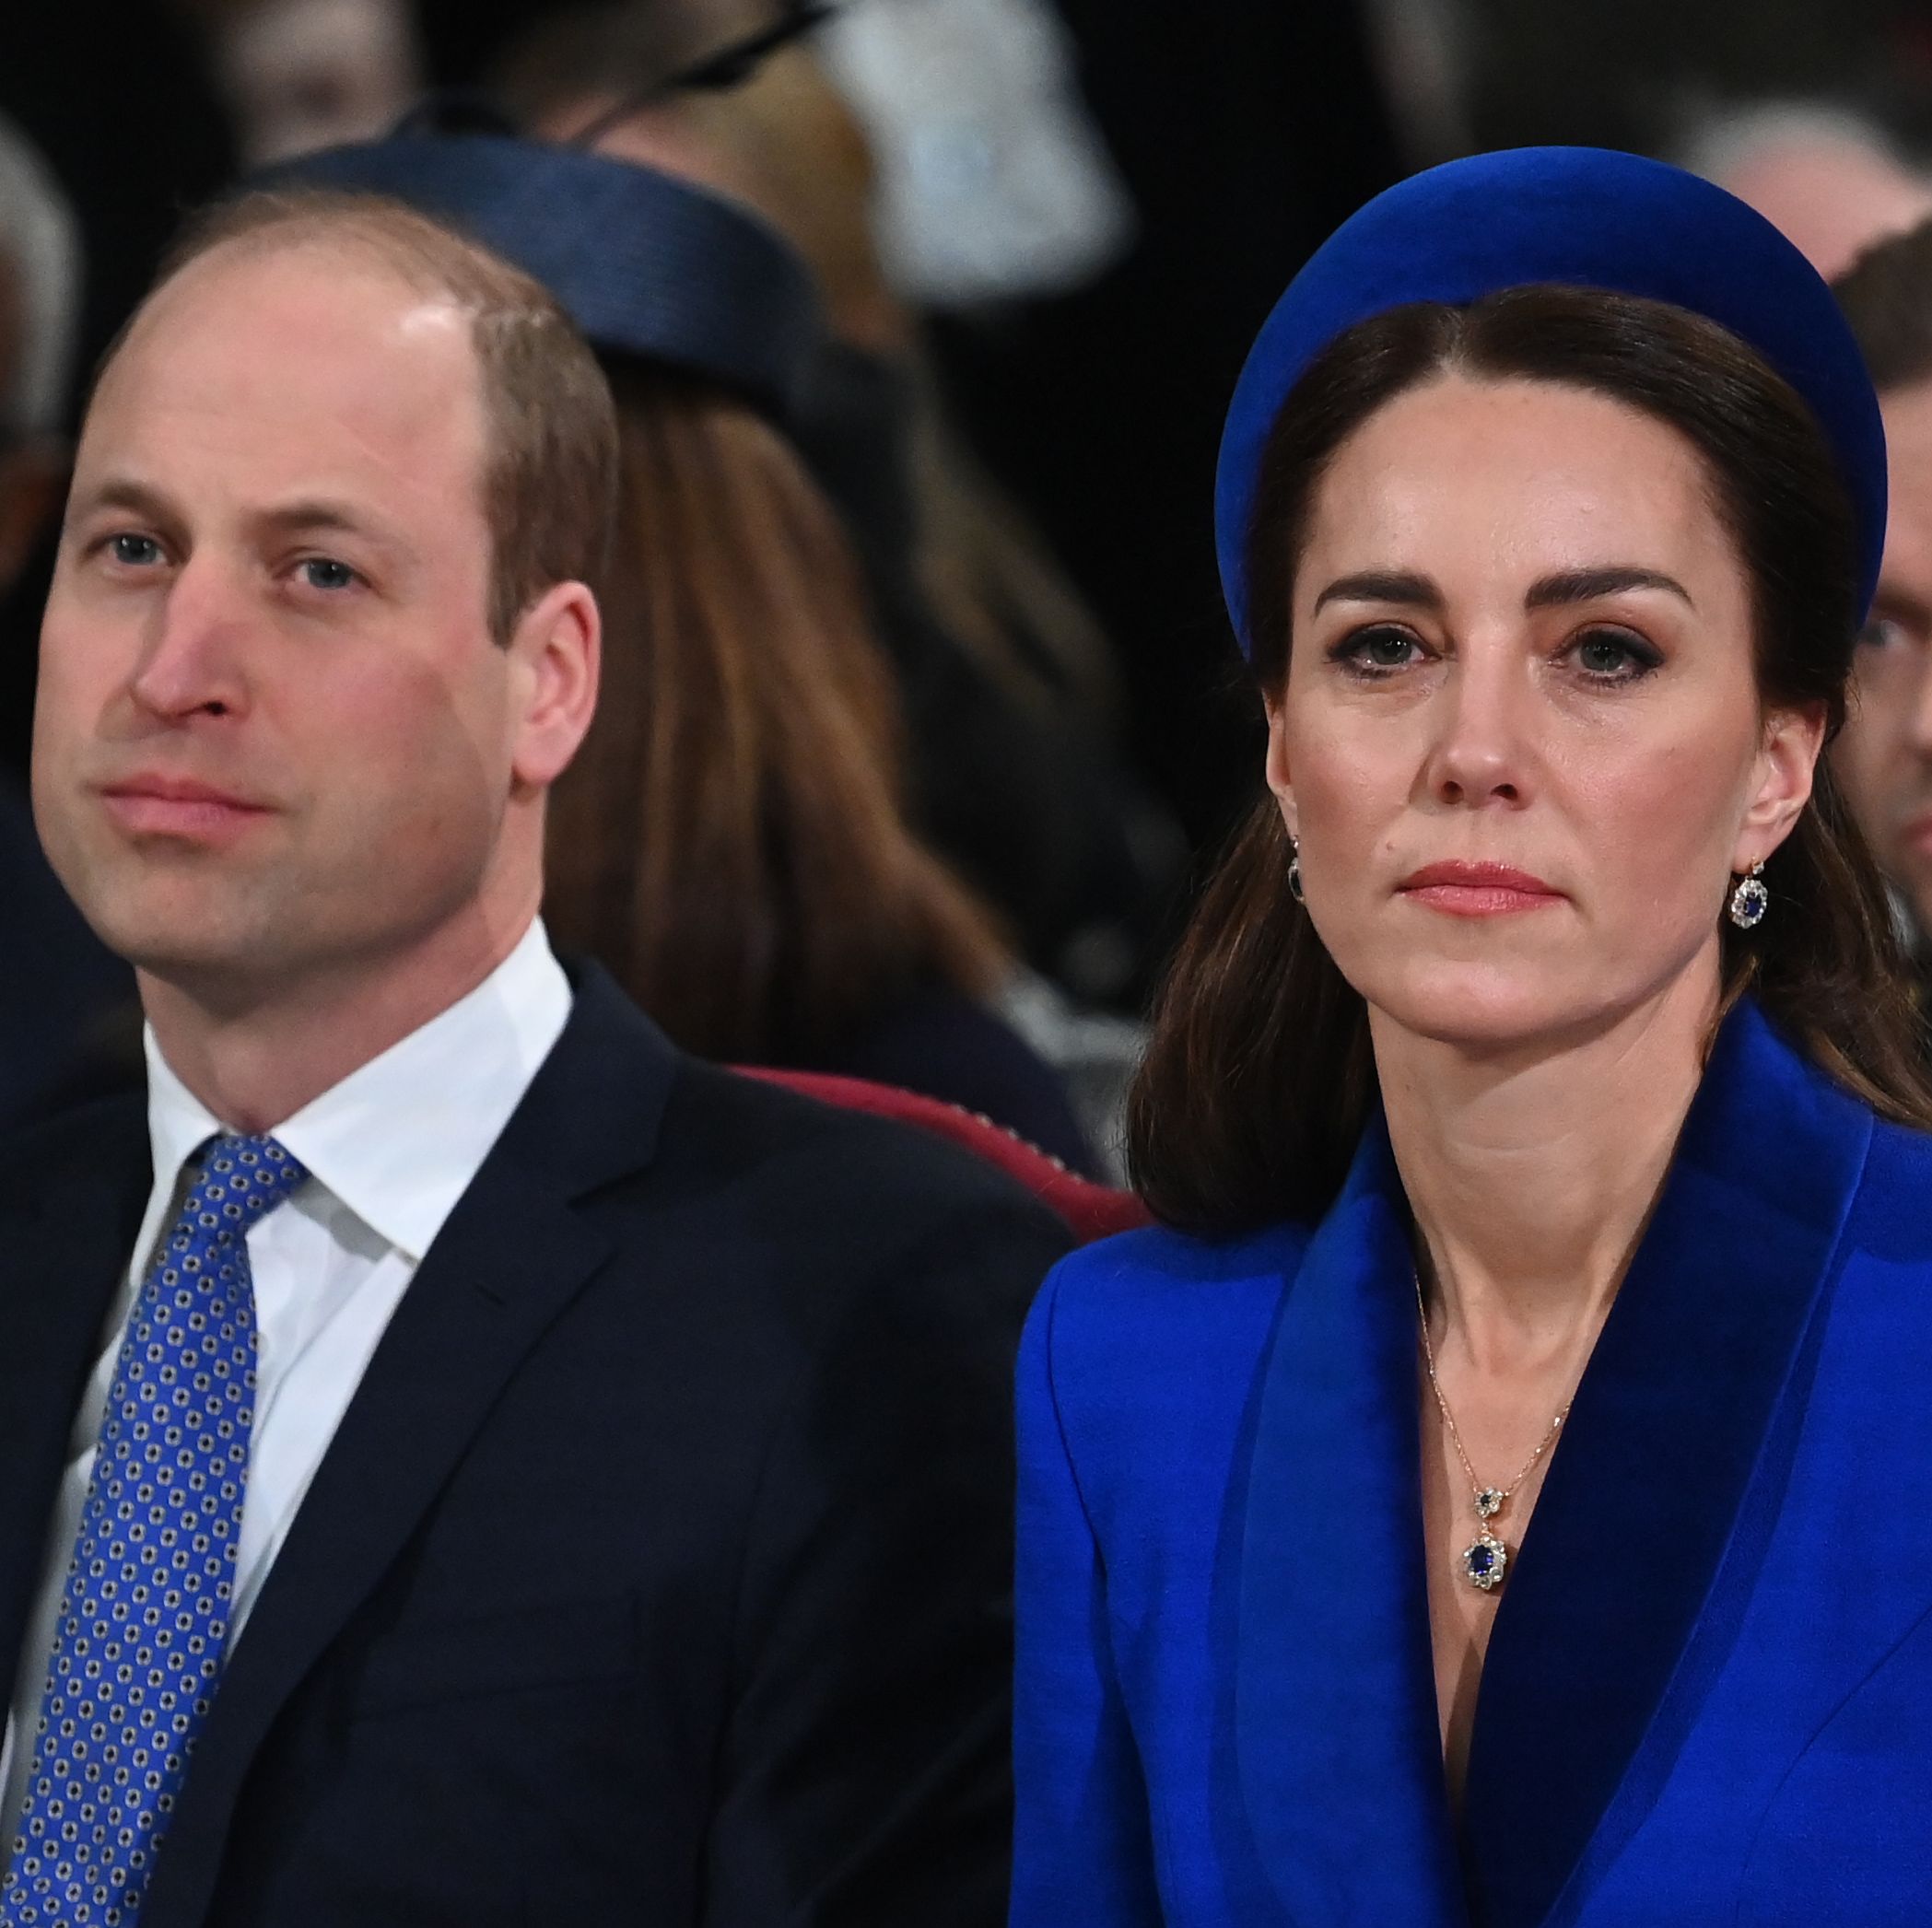 Royal Family Fears a 